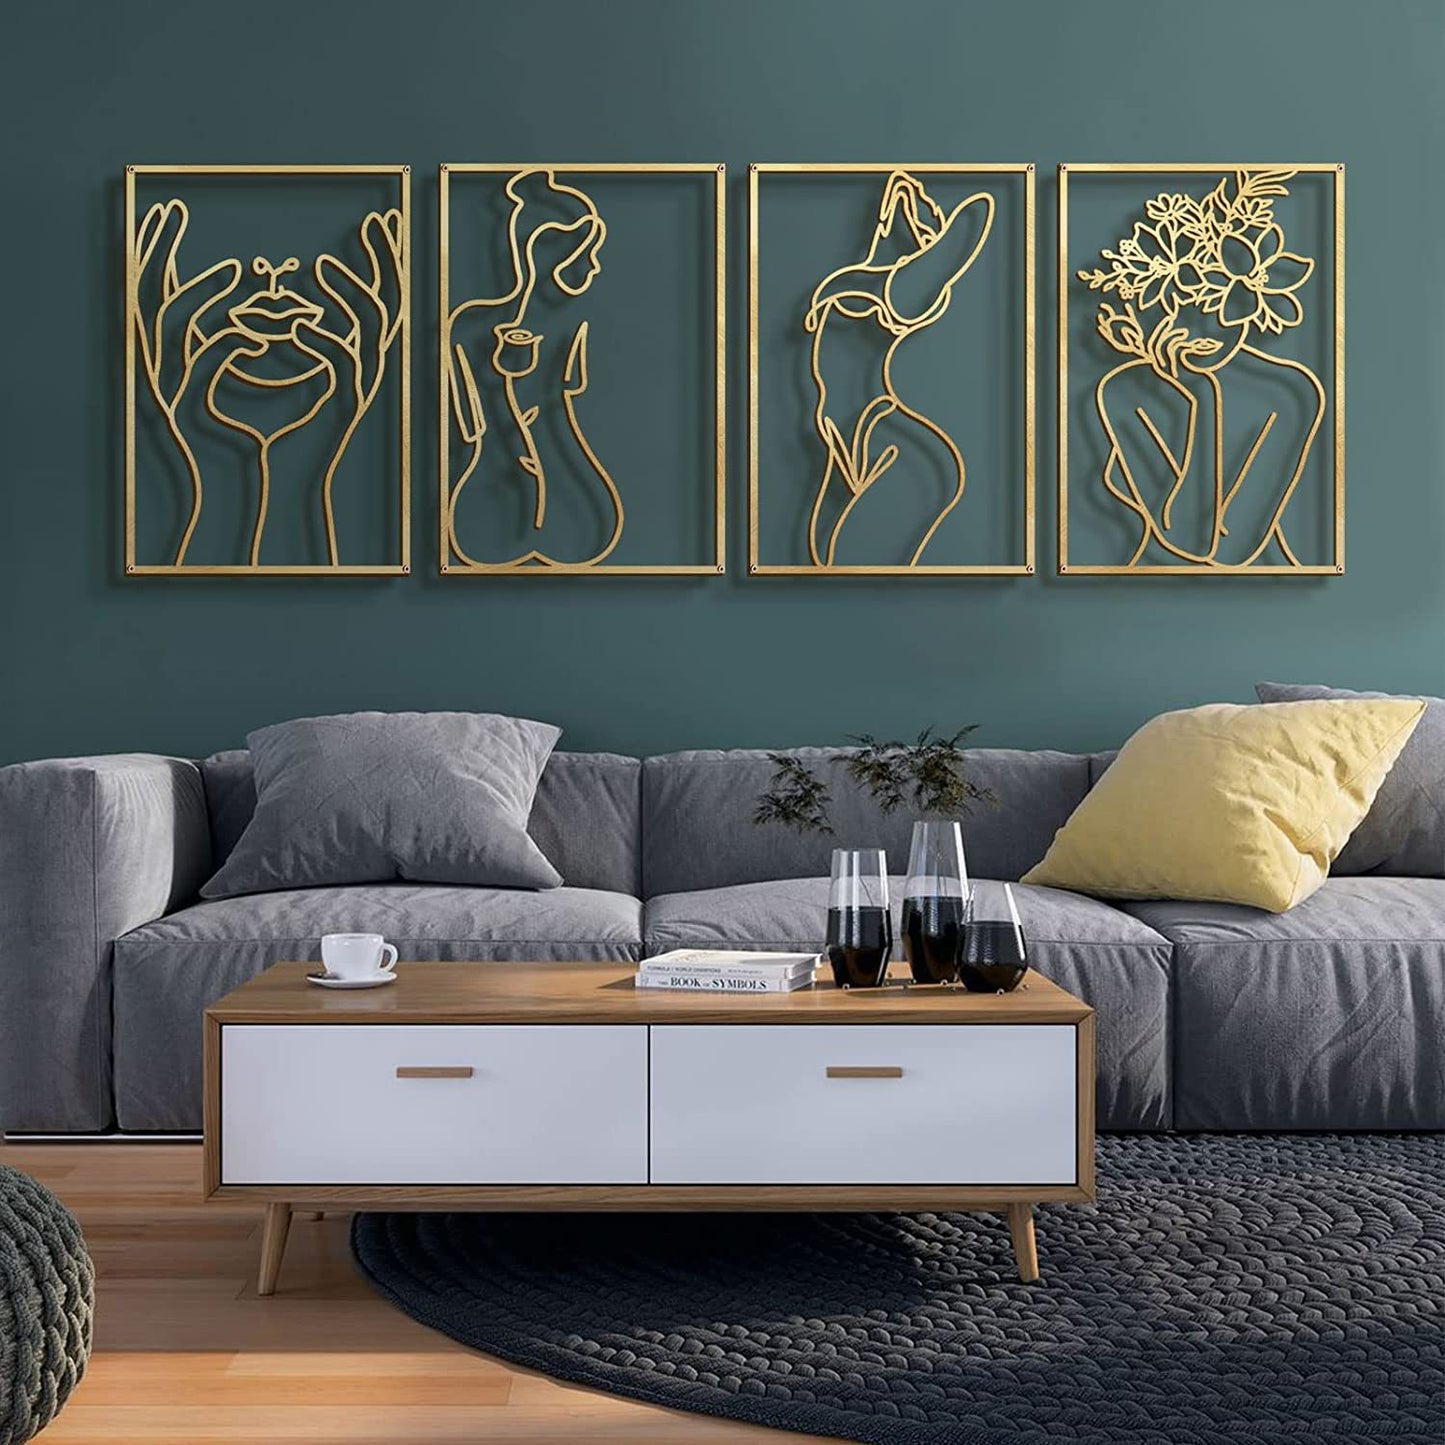 Elegant Contours - Set of 4 Golden Silhouette Metal Wall Art